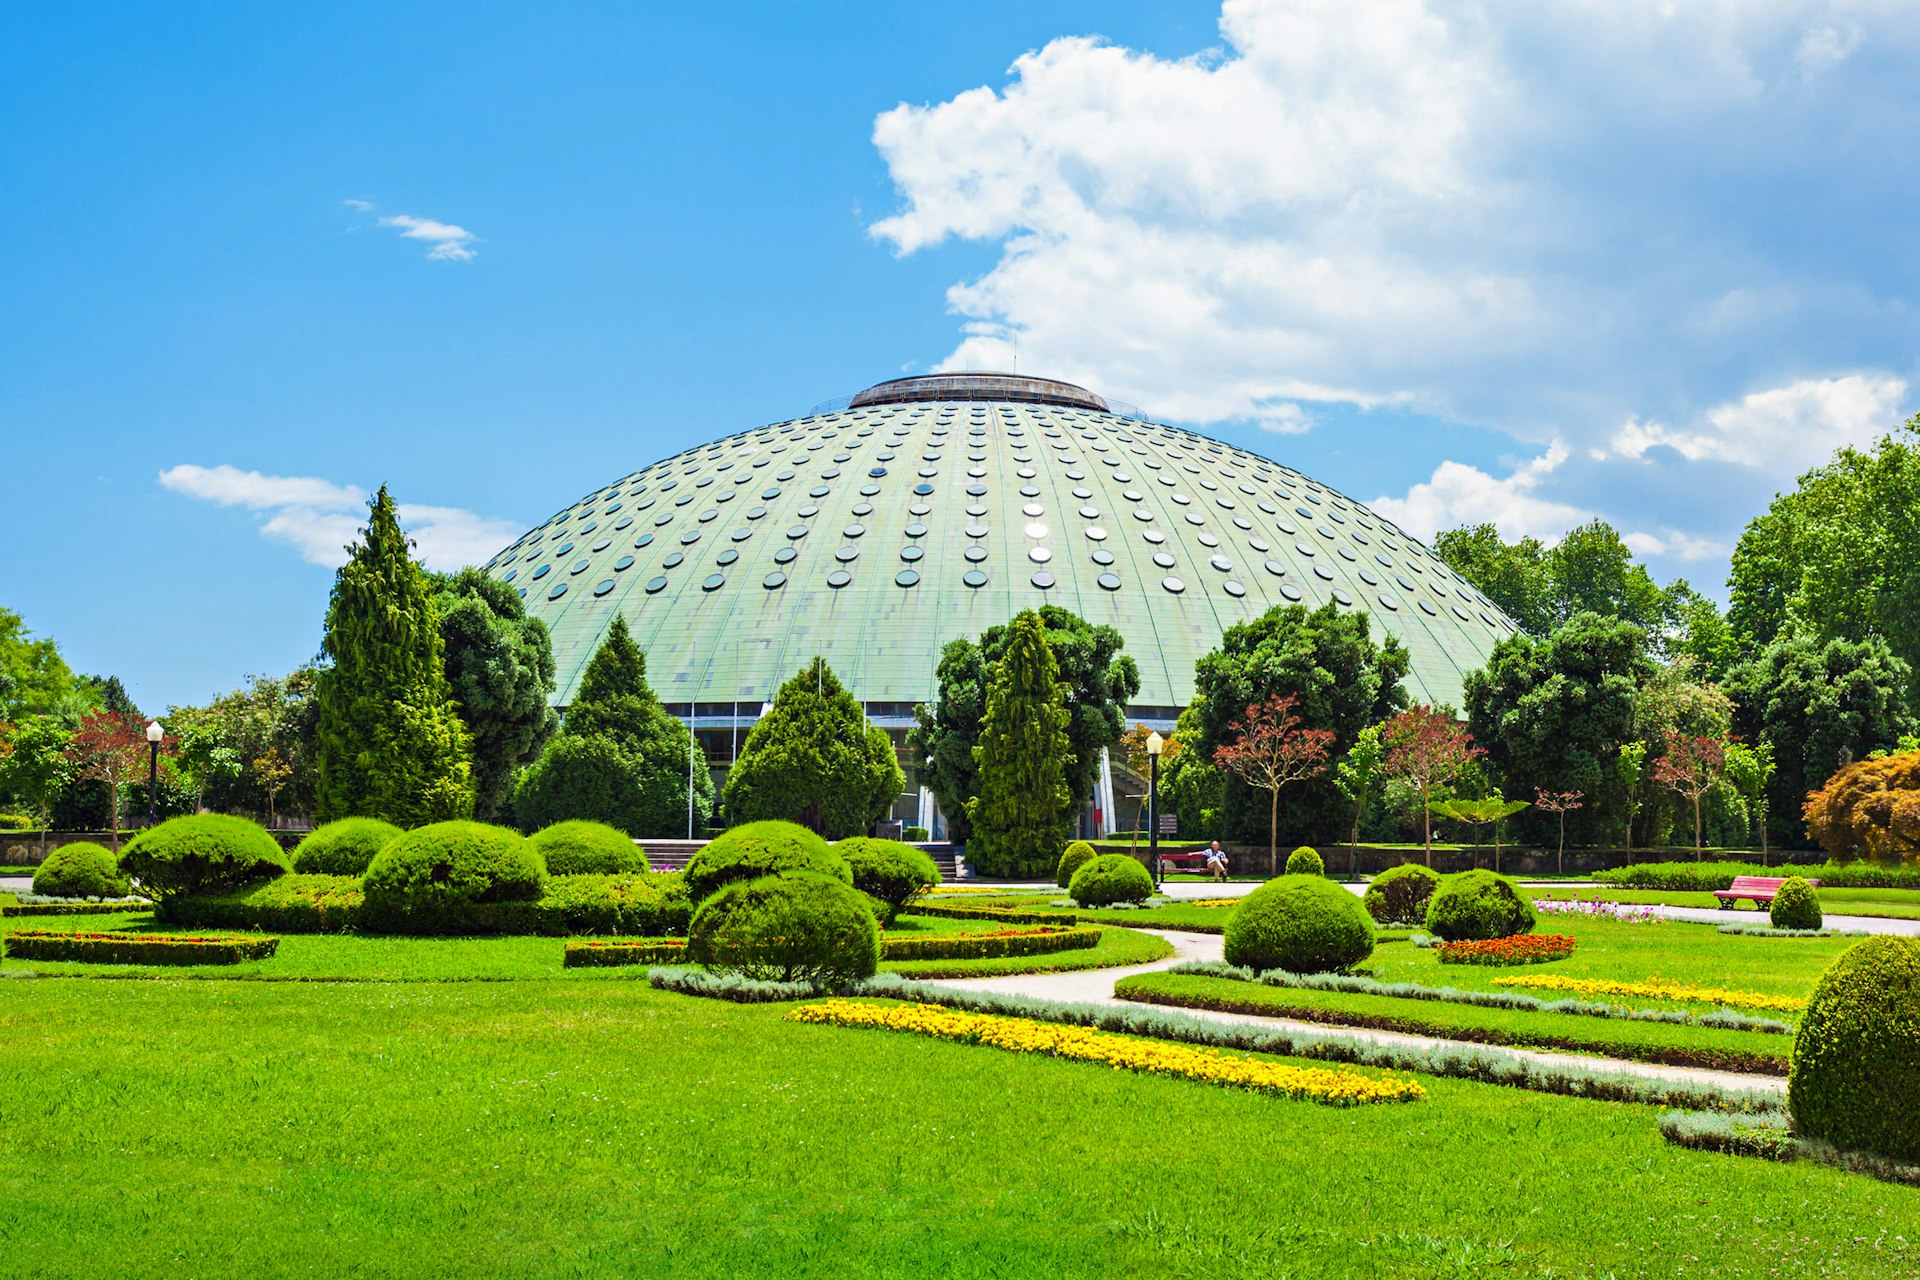 The green Jardins do Palacio de Cristal